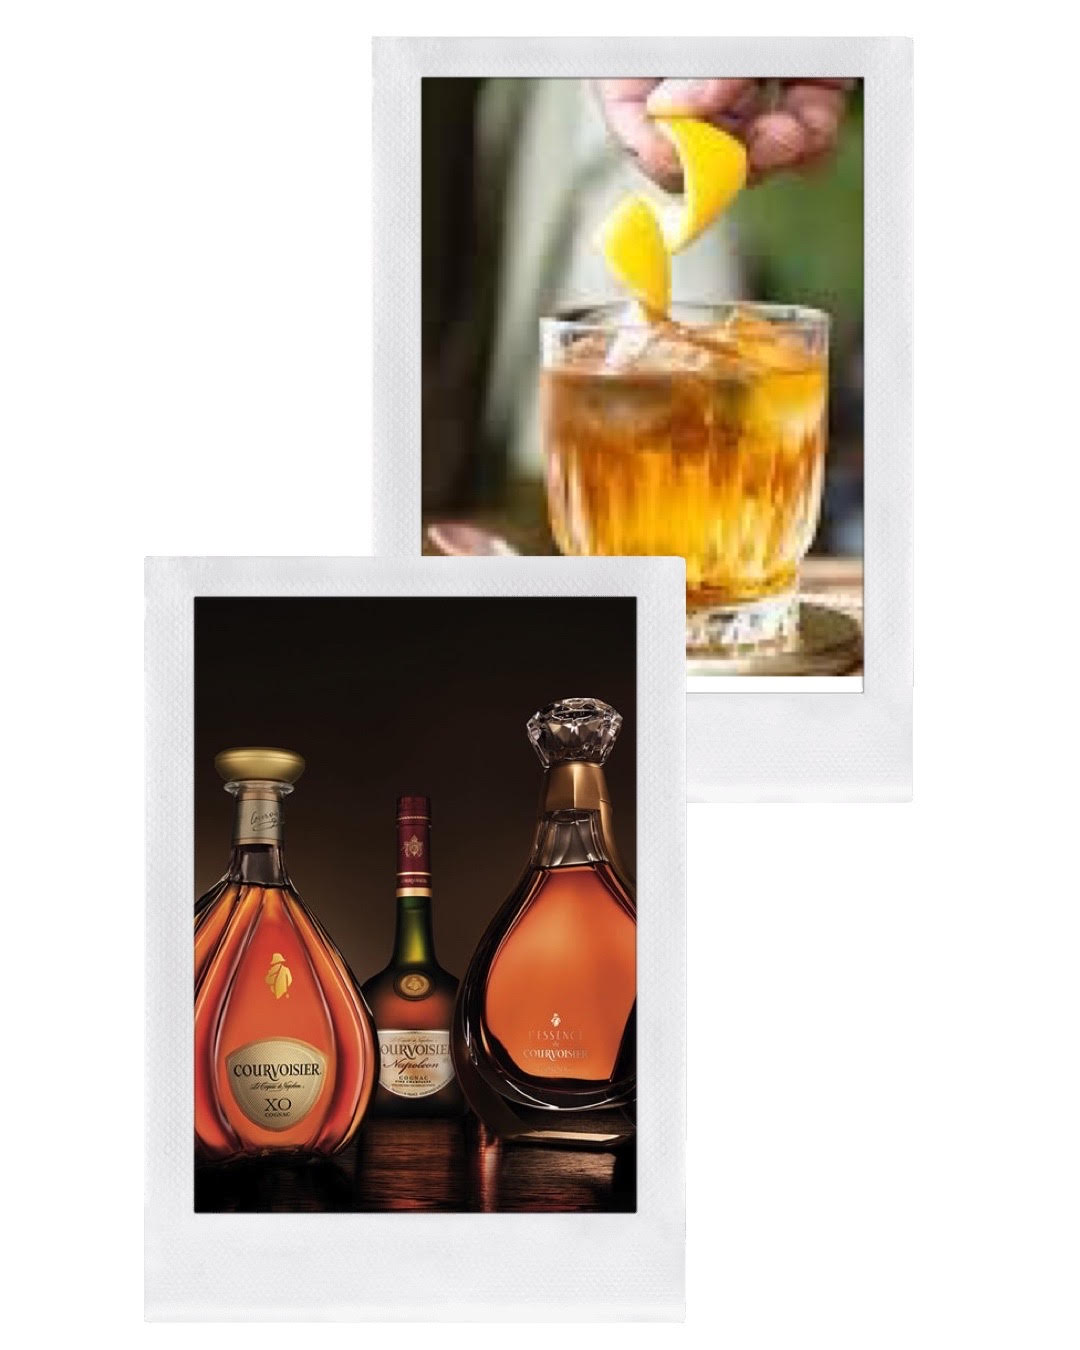 Cognac Sales Up 31% In 2021